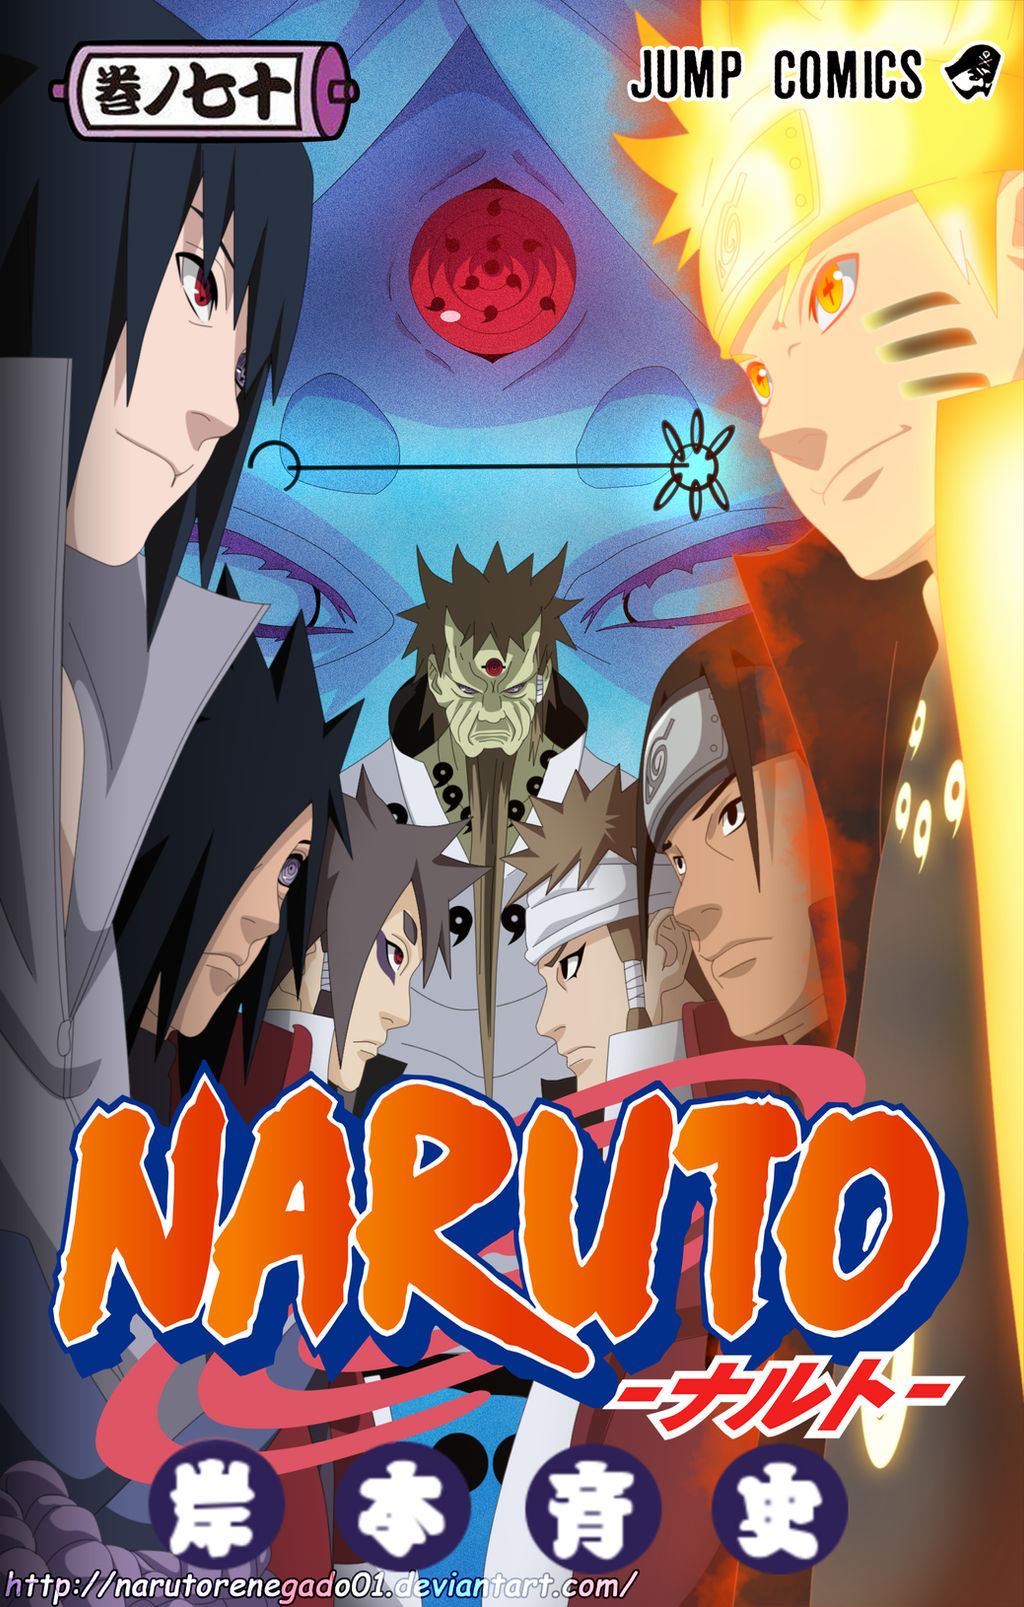 Naruto (Classico) by OtakuGokuSSJ001 on DeviantArt